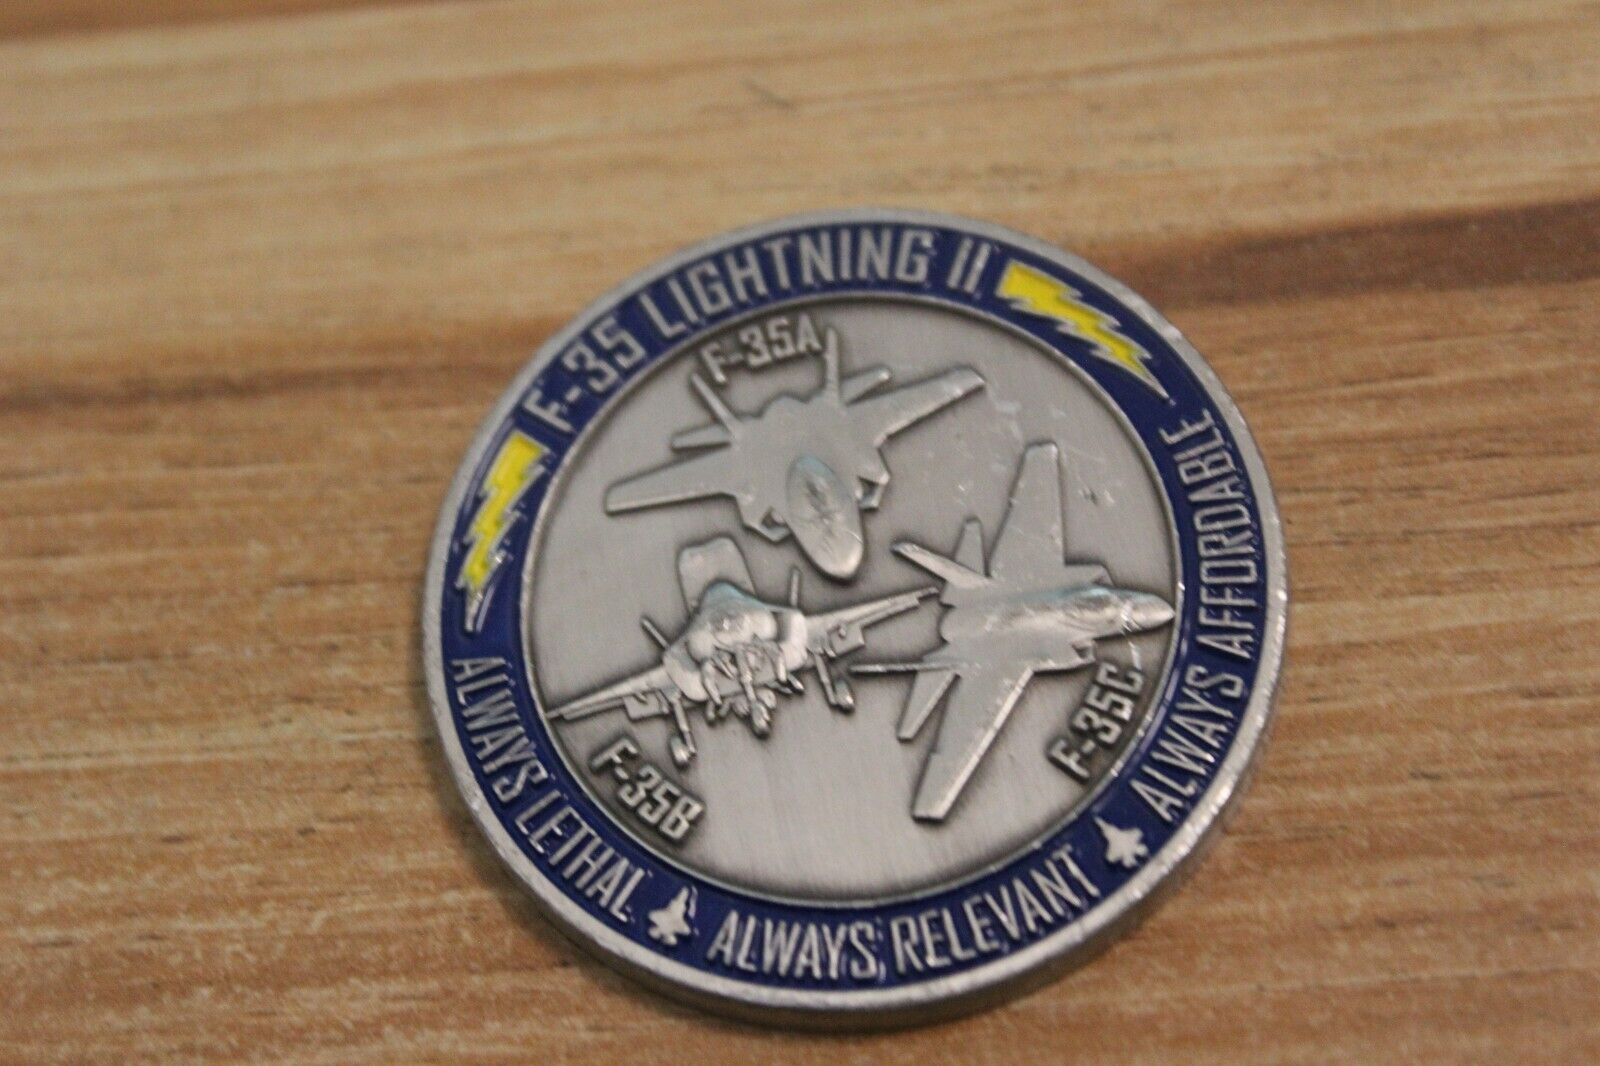 Lockheed Martin Aeronautics F-35 Lightning II Challenge Coin